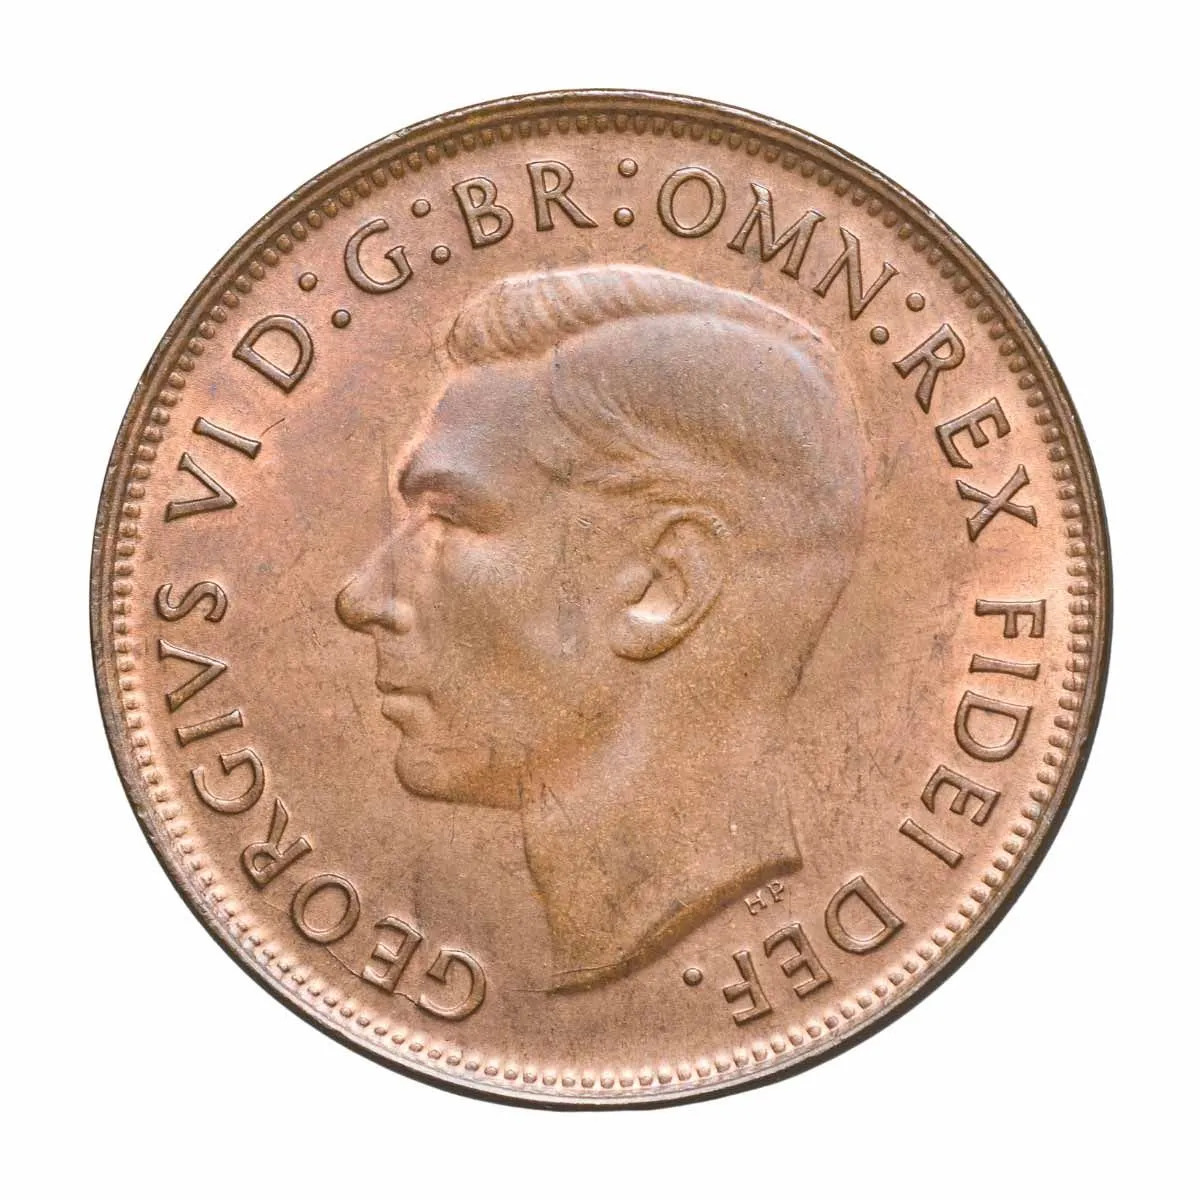 1949 Penny Uncirculated